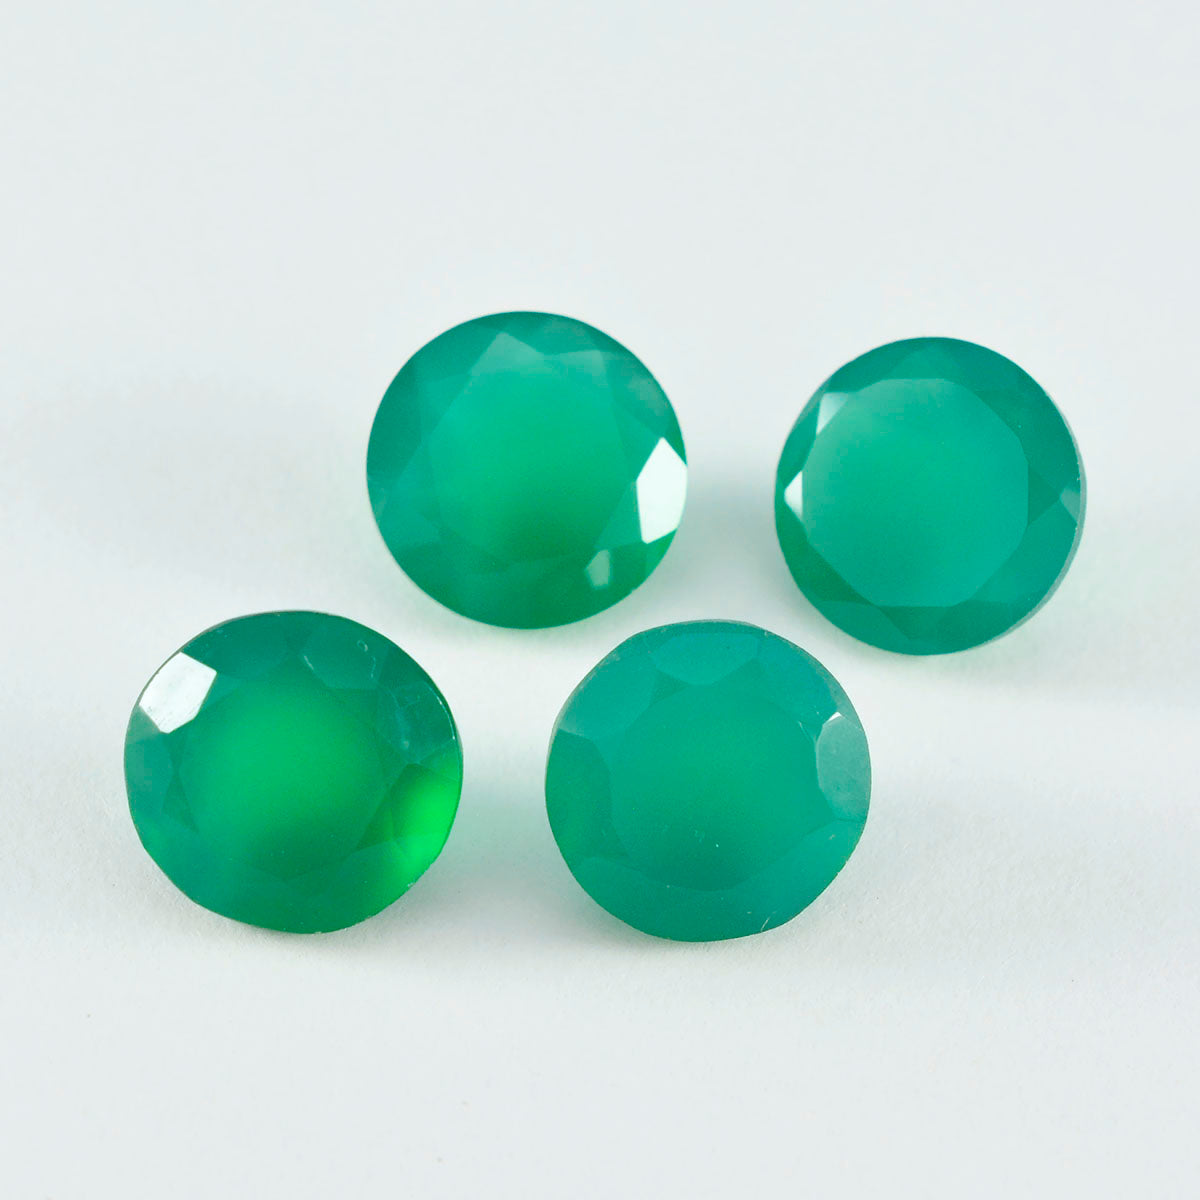 Riyogems 1PC Genuine Green Onyx Faceted 10X10 mm Round Shape pretty Quality Loose Gems